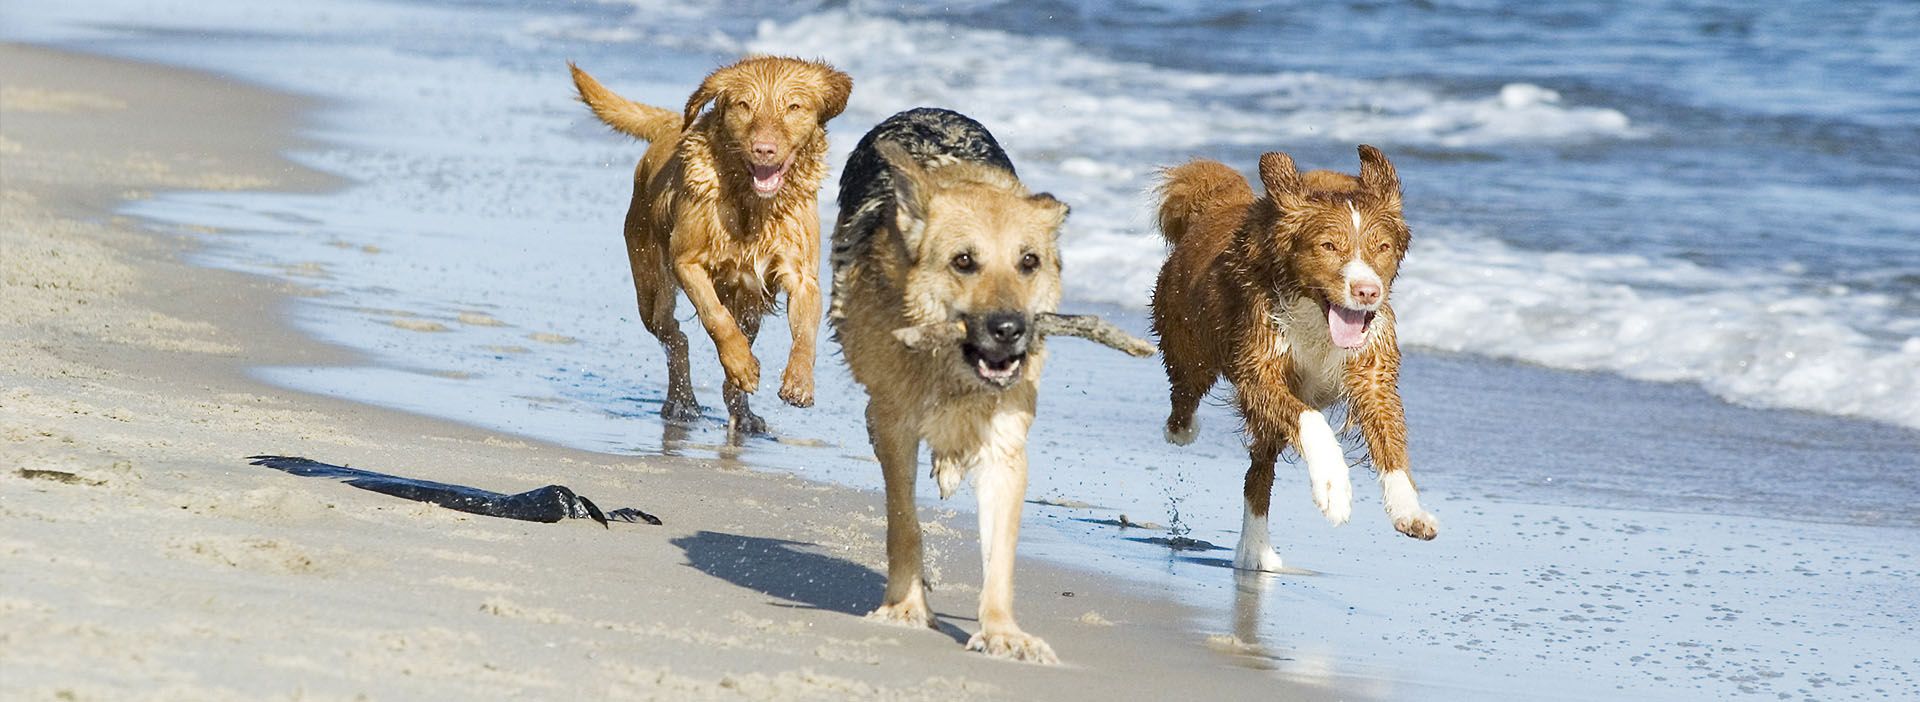 Hunde laufen am Strand im Meer